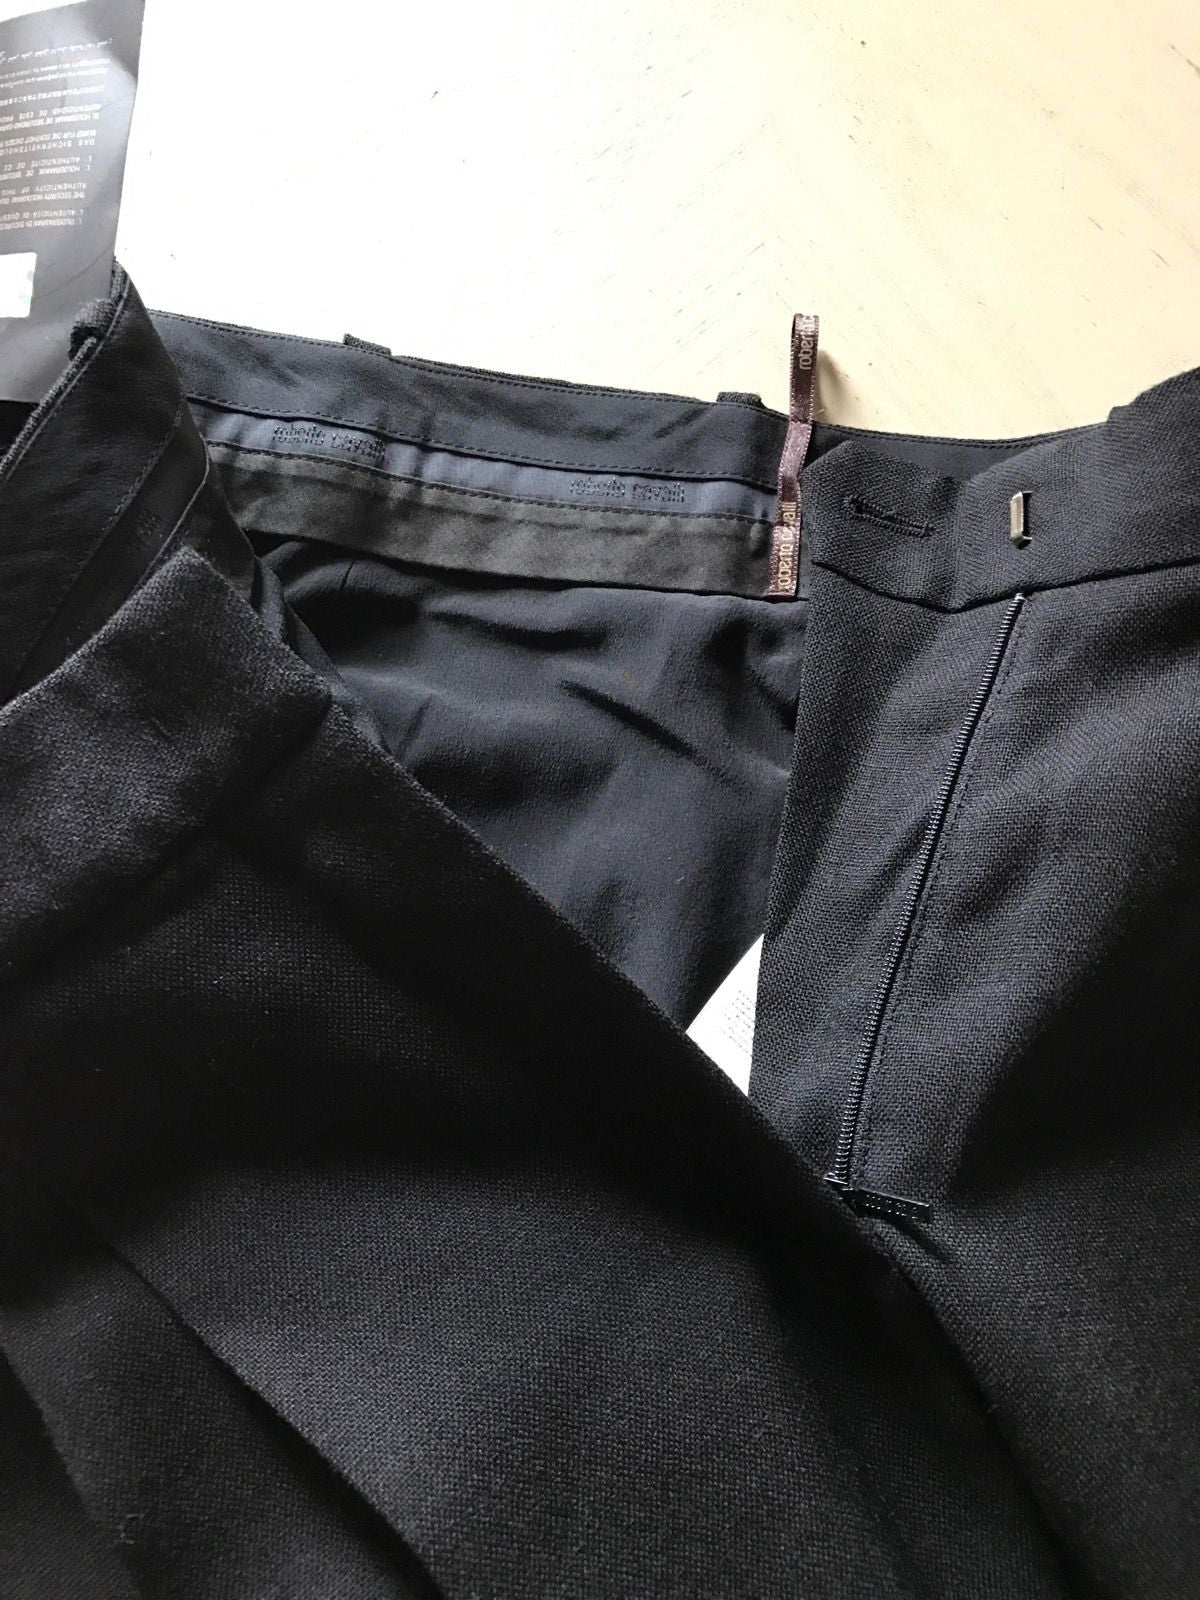 New $1095 Roberto Cavalli Women's  Pants / Skirt Black 46 Eu (16 US ) Italy - BAYSUPERSTORE